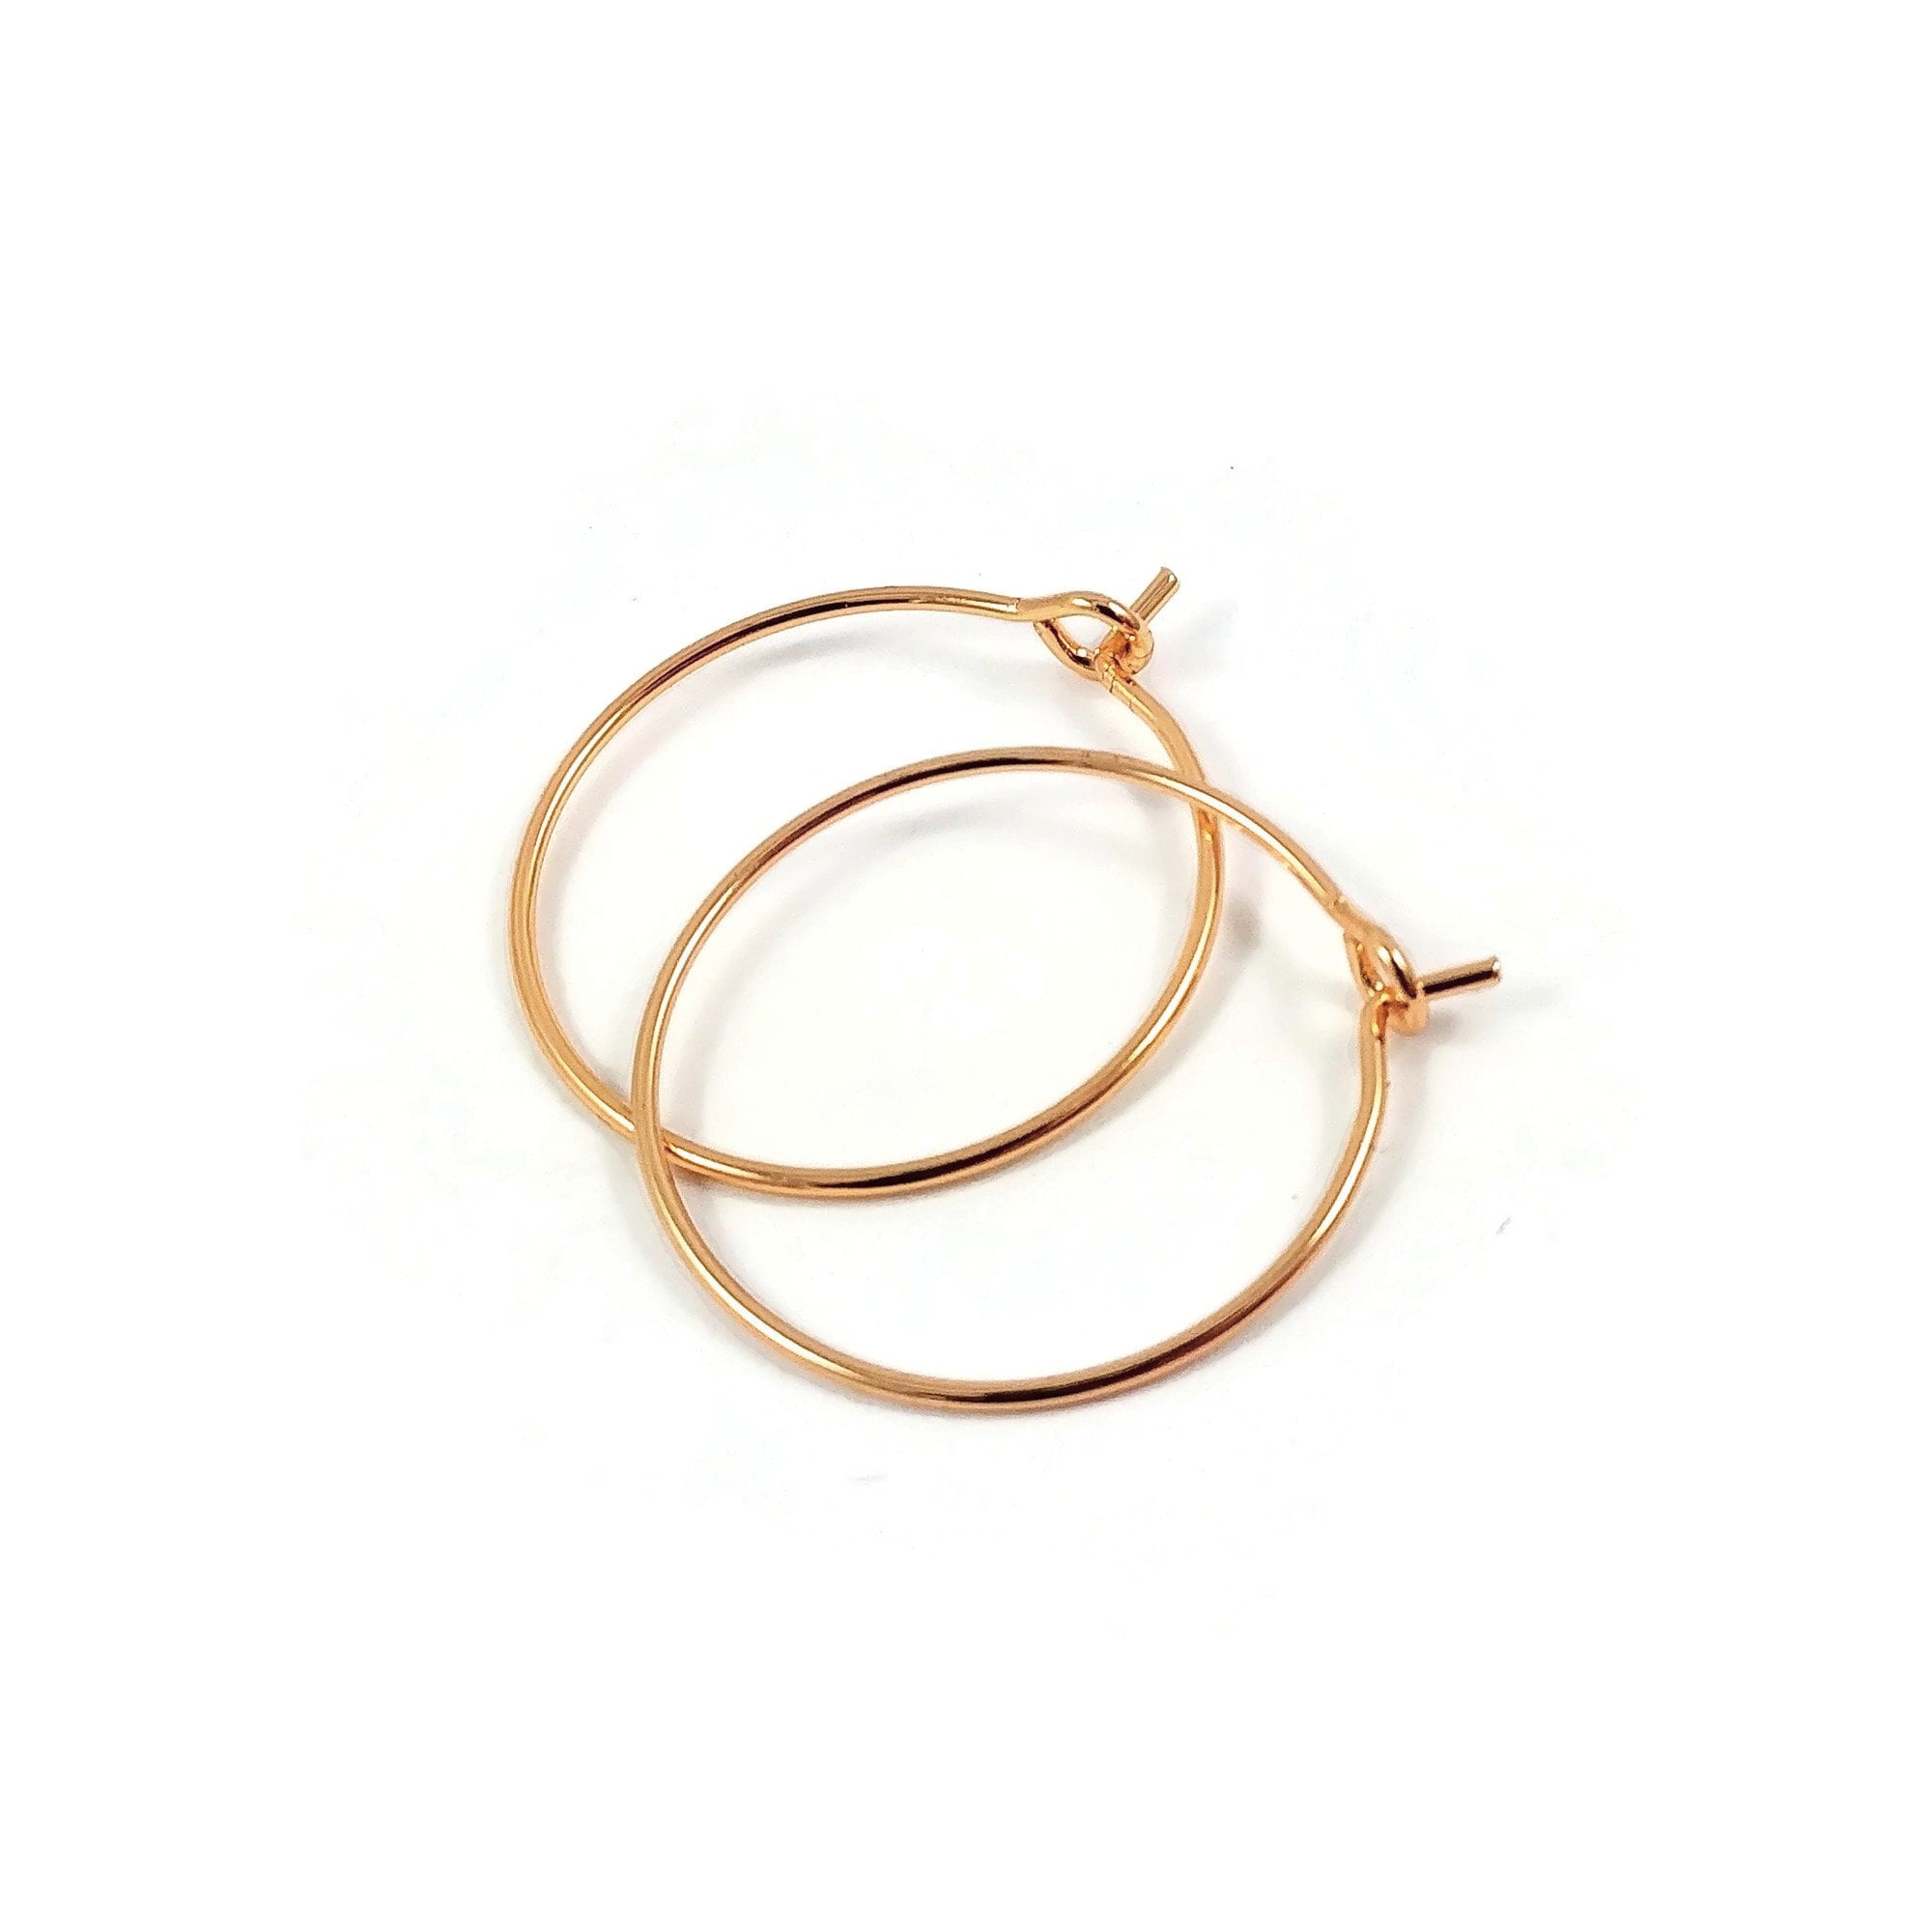 18K Gold plated hoops, Nickel free earring findings, 20mm earwire for jewelry making